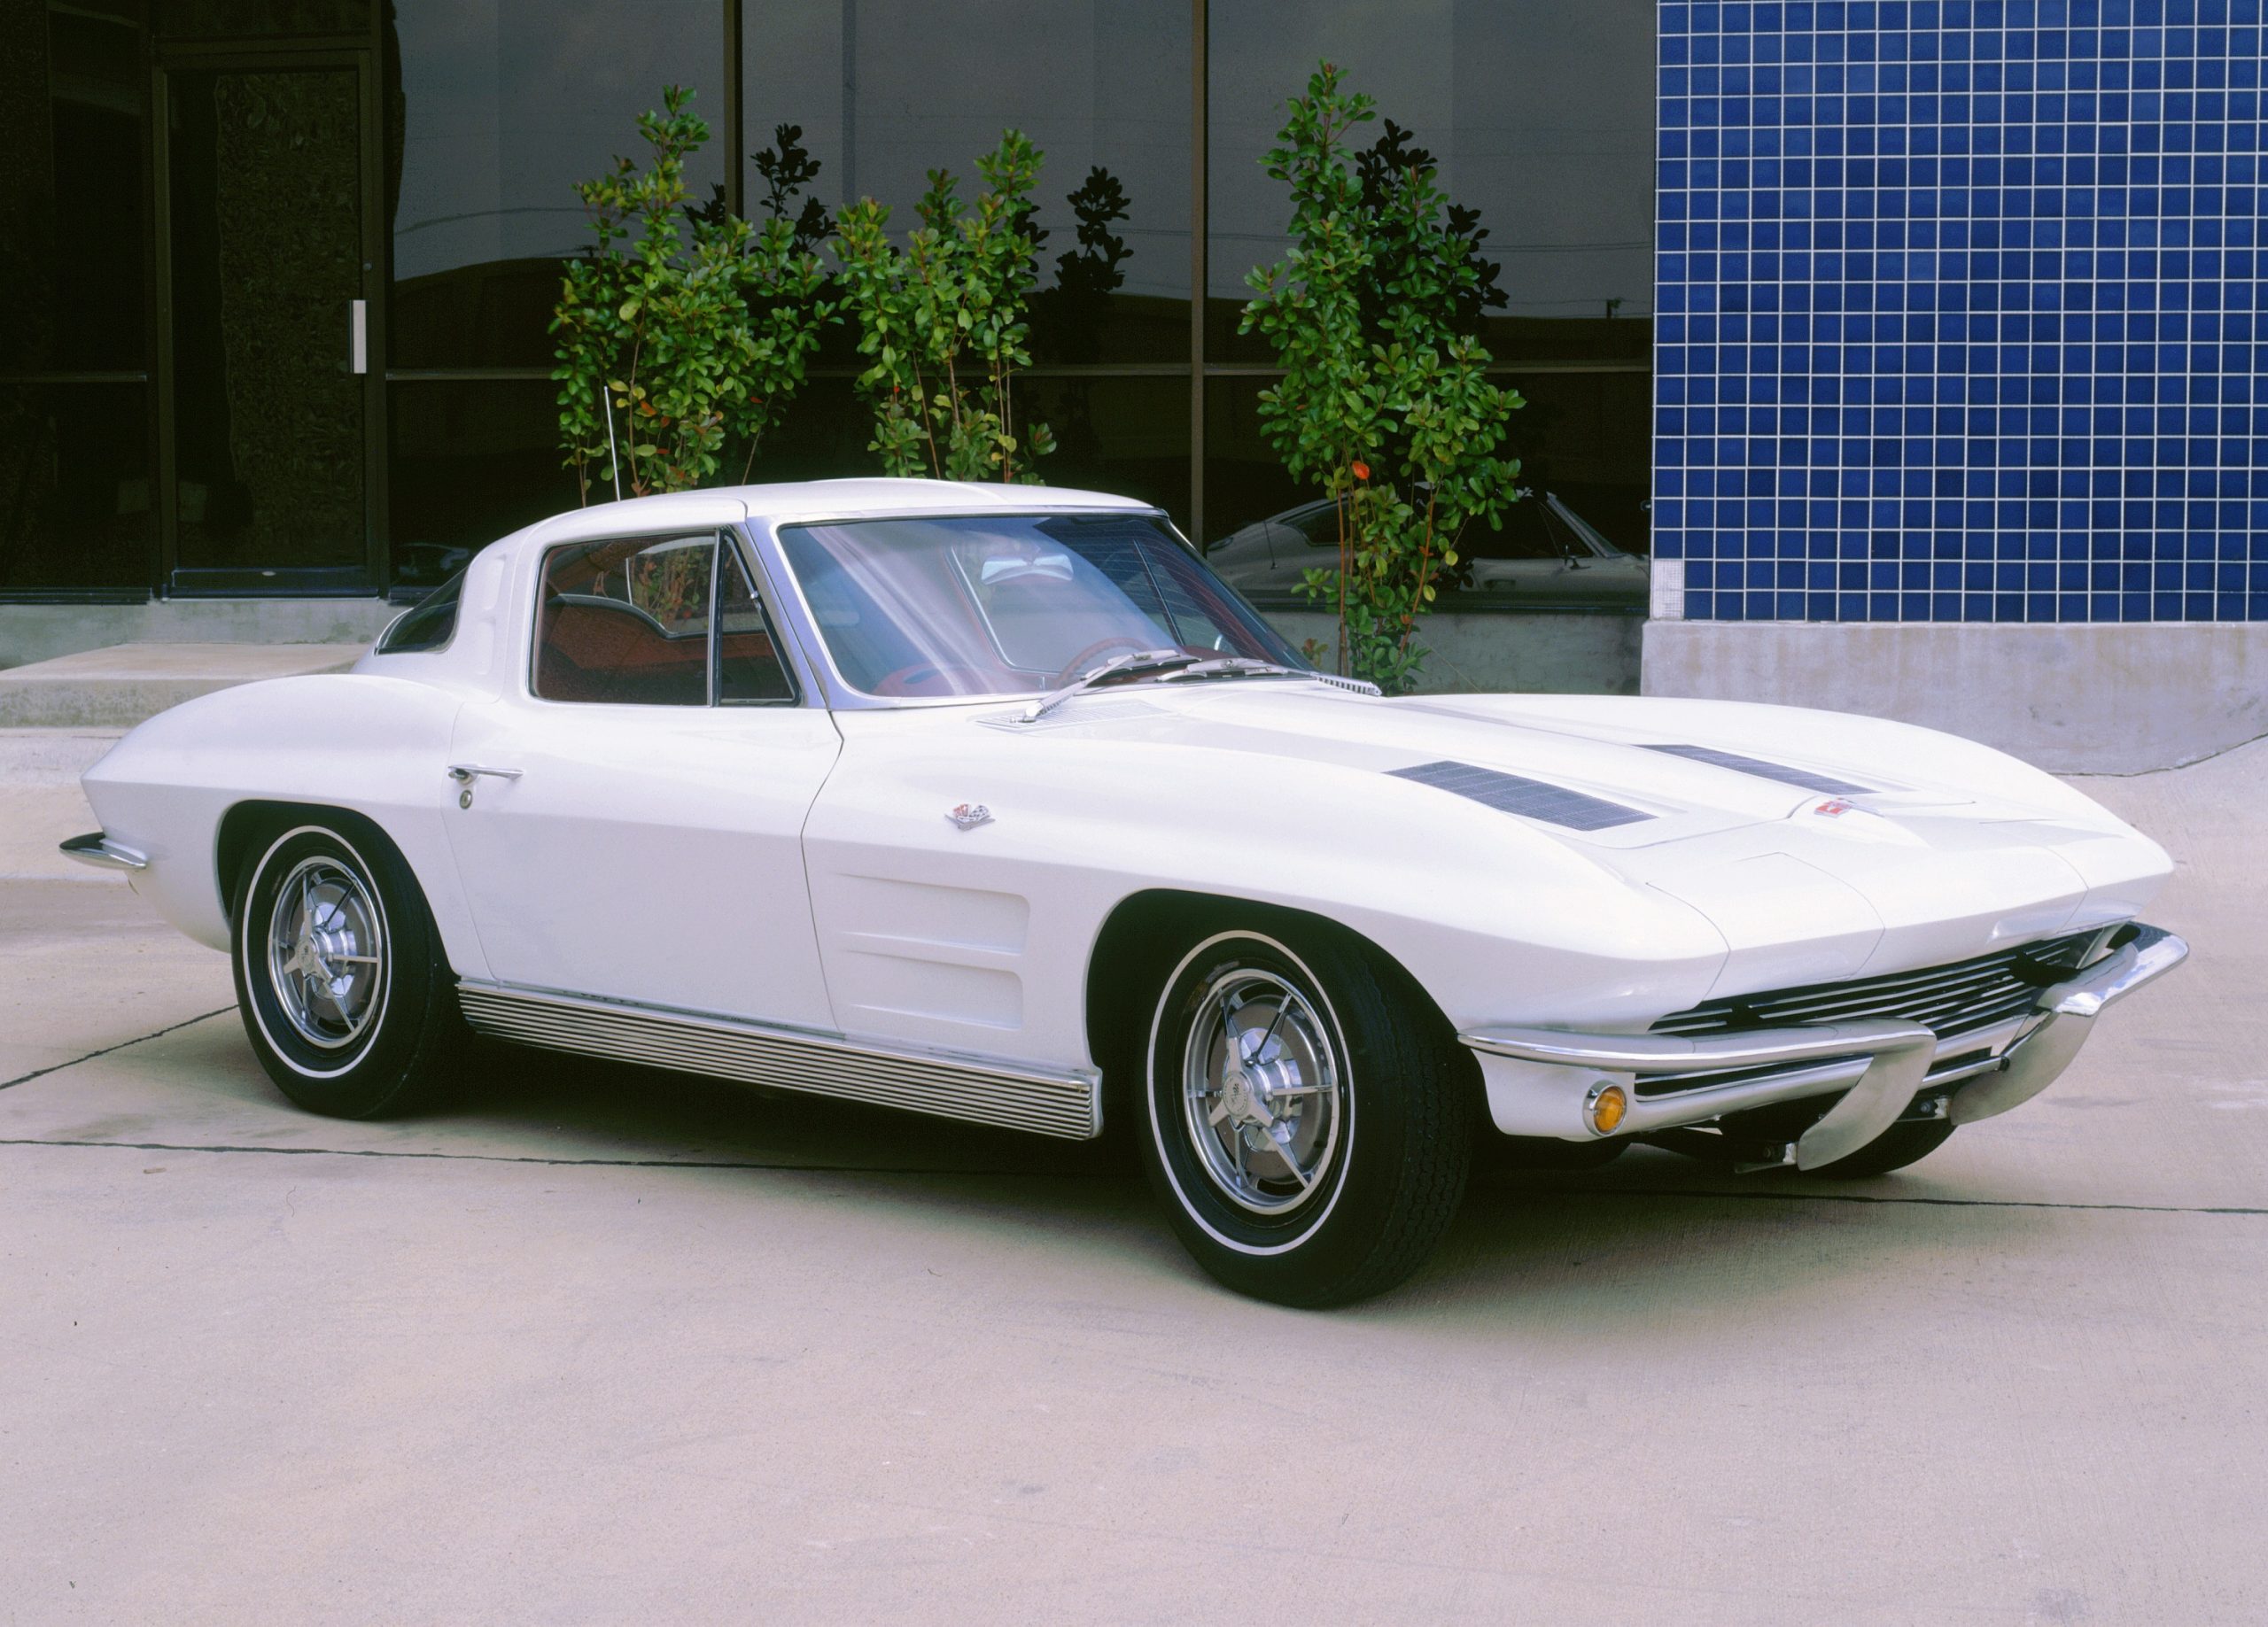 A white split-window Corvette from '63